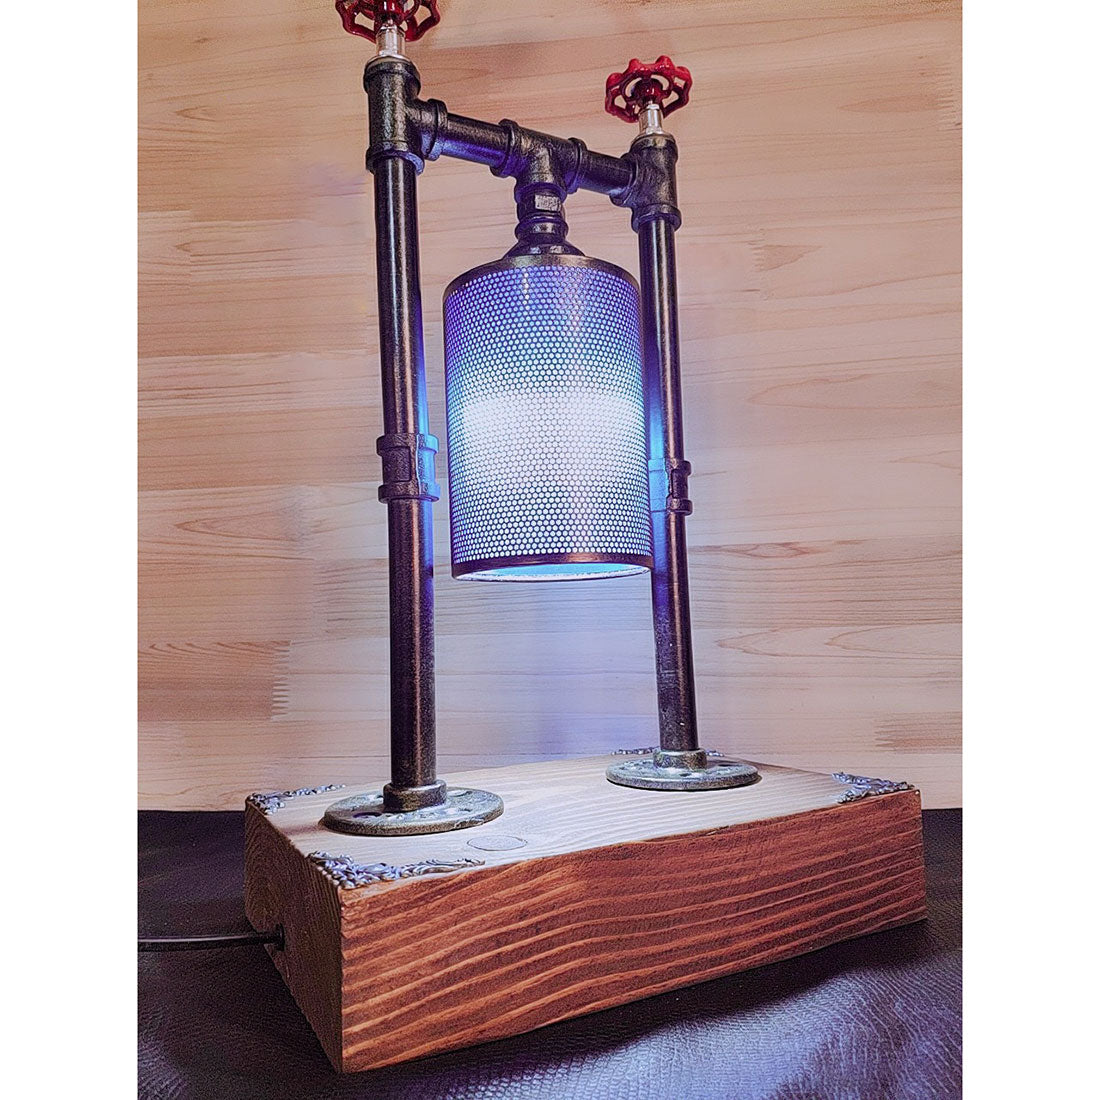 Industrial Style Retro Water Pipe Modified Table Lamp Handmade Metal Desk Lamp